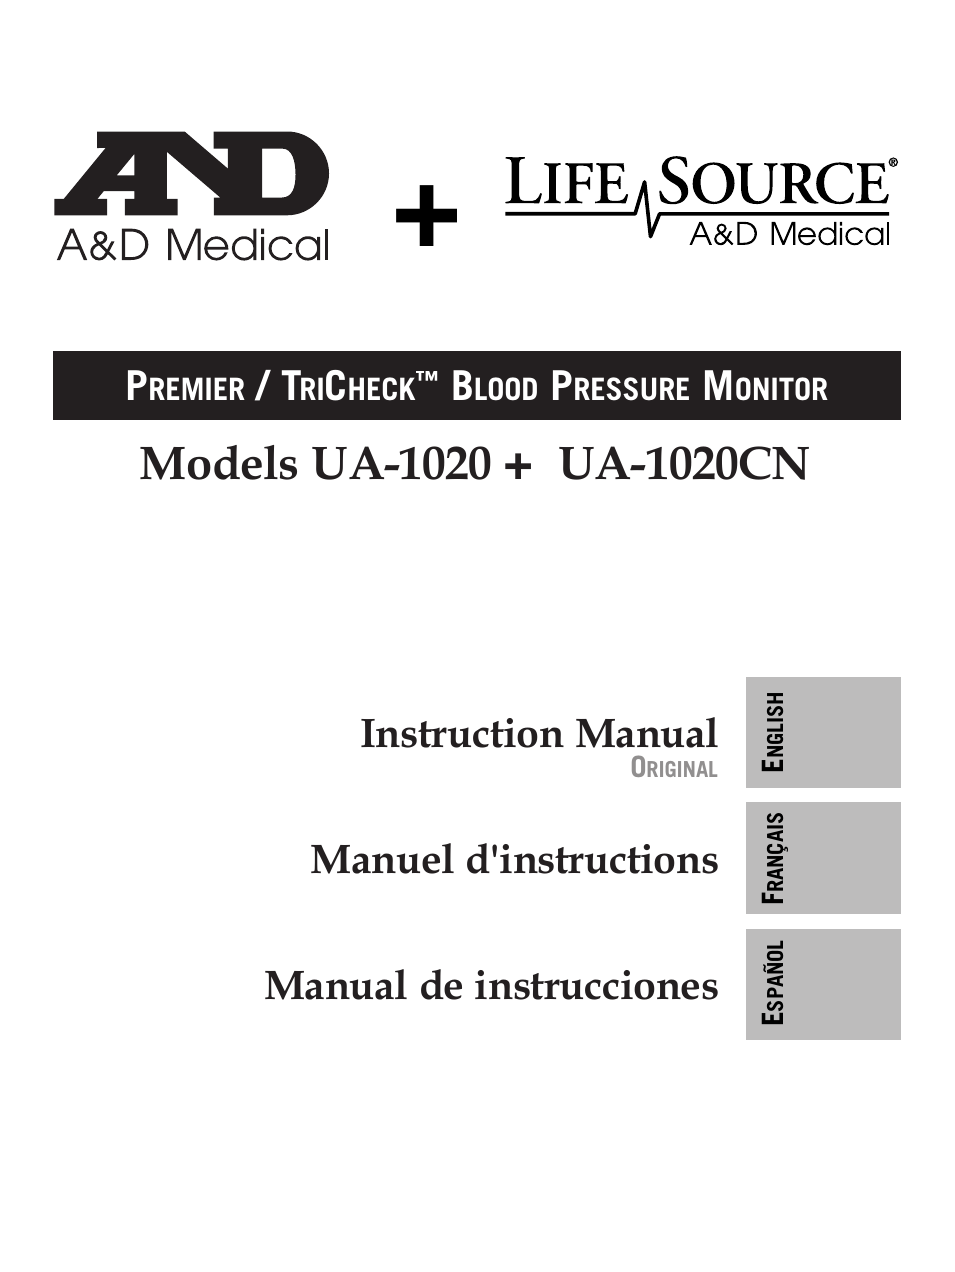 Premier/TriCheck Blood Pressure MOnitor UA-1020CN (Page 1)